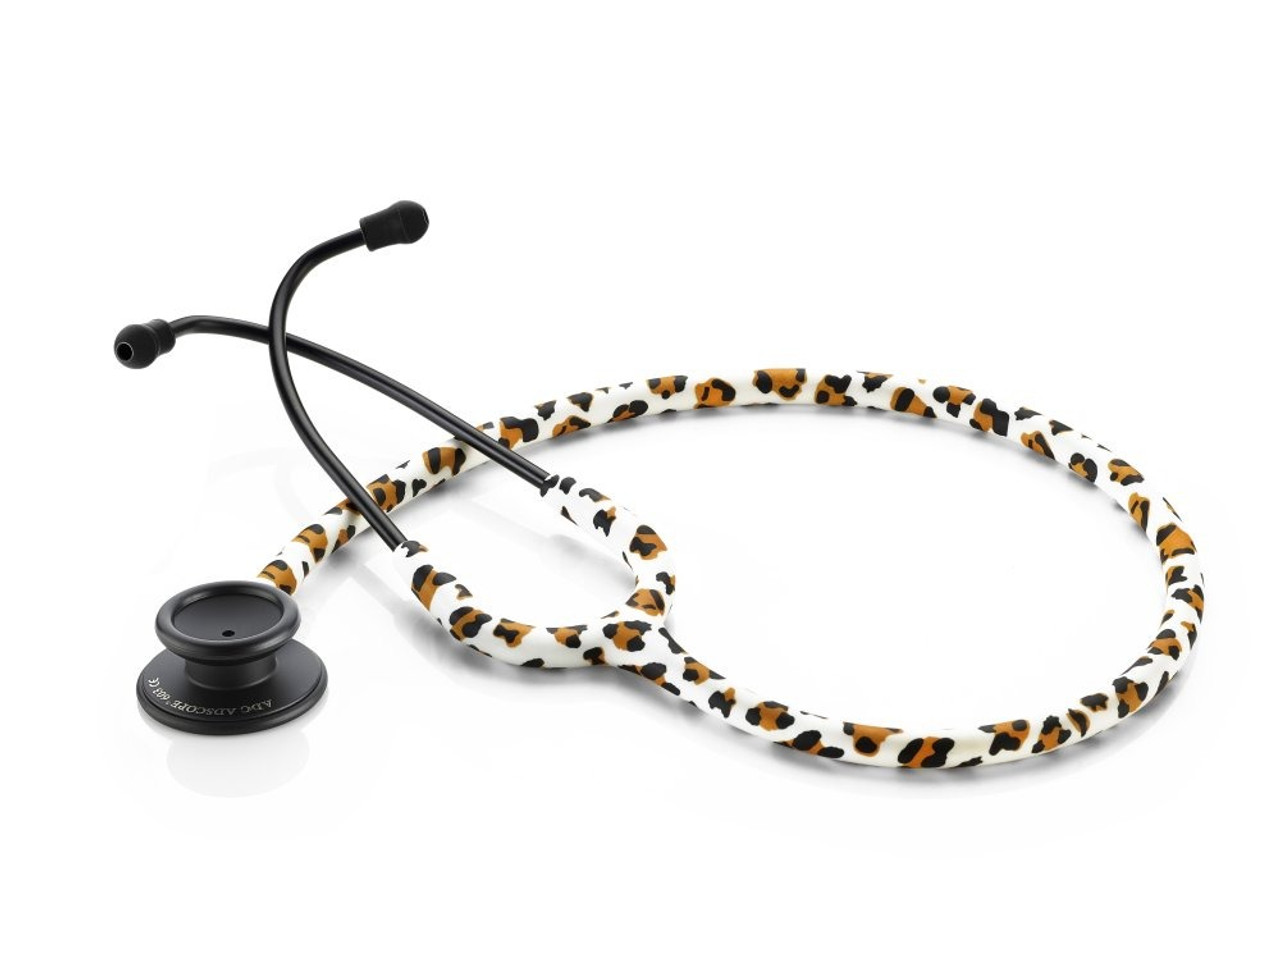 Leopard Stethoscope 